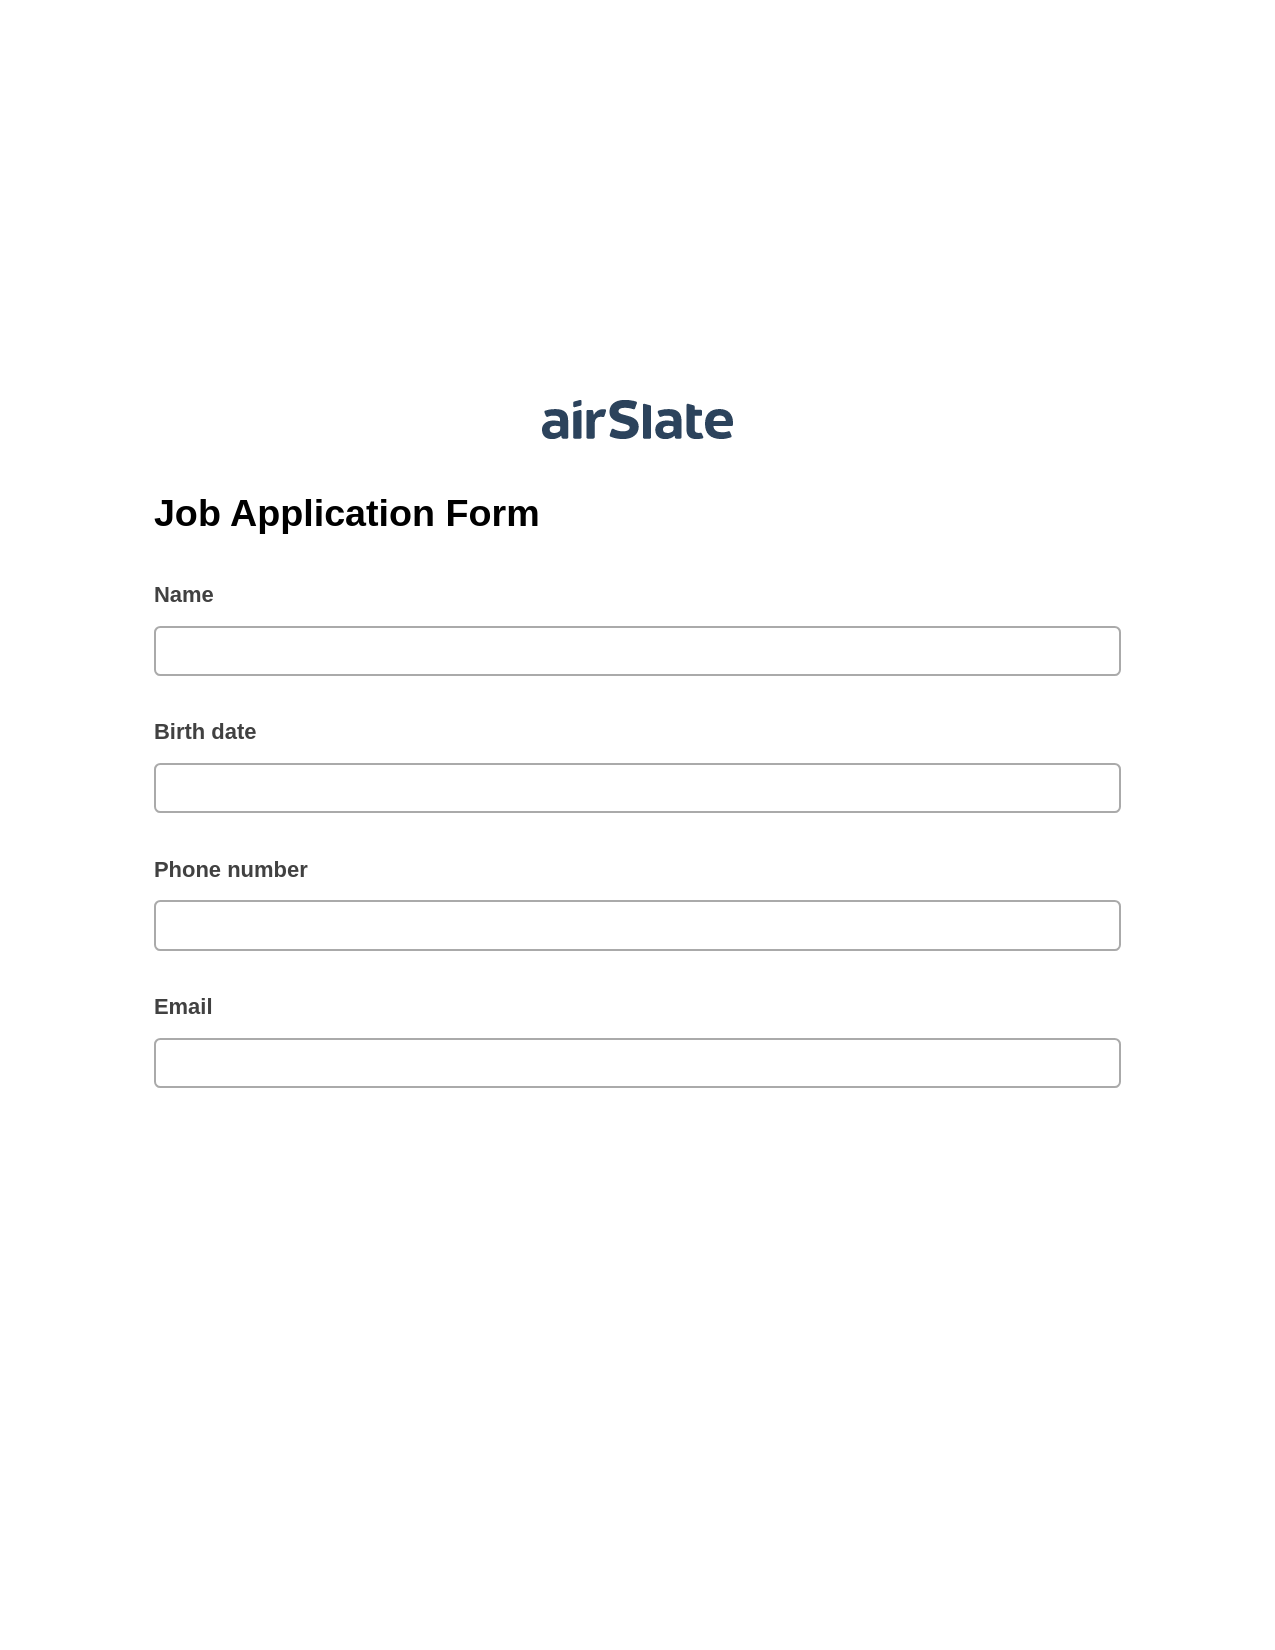 Job Application Form Pre-fill Document Bot, Create QuickBooks invoice Bot, Slack Two-Way Binding Bot